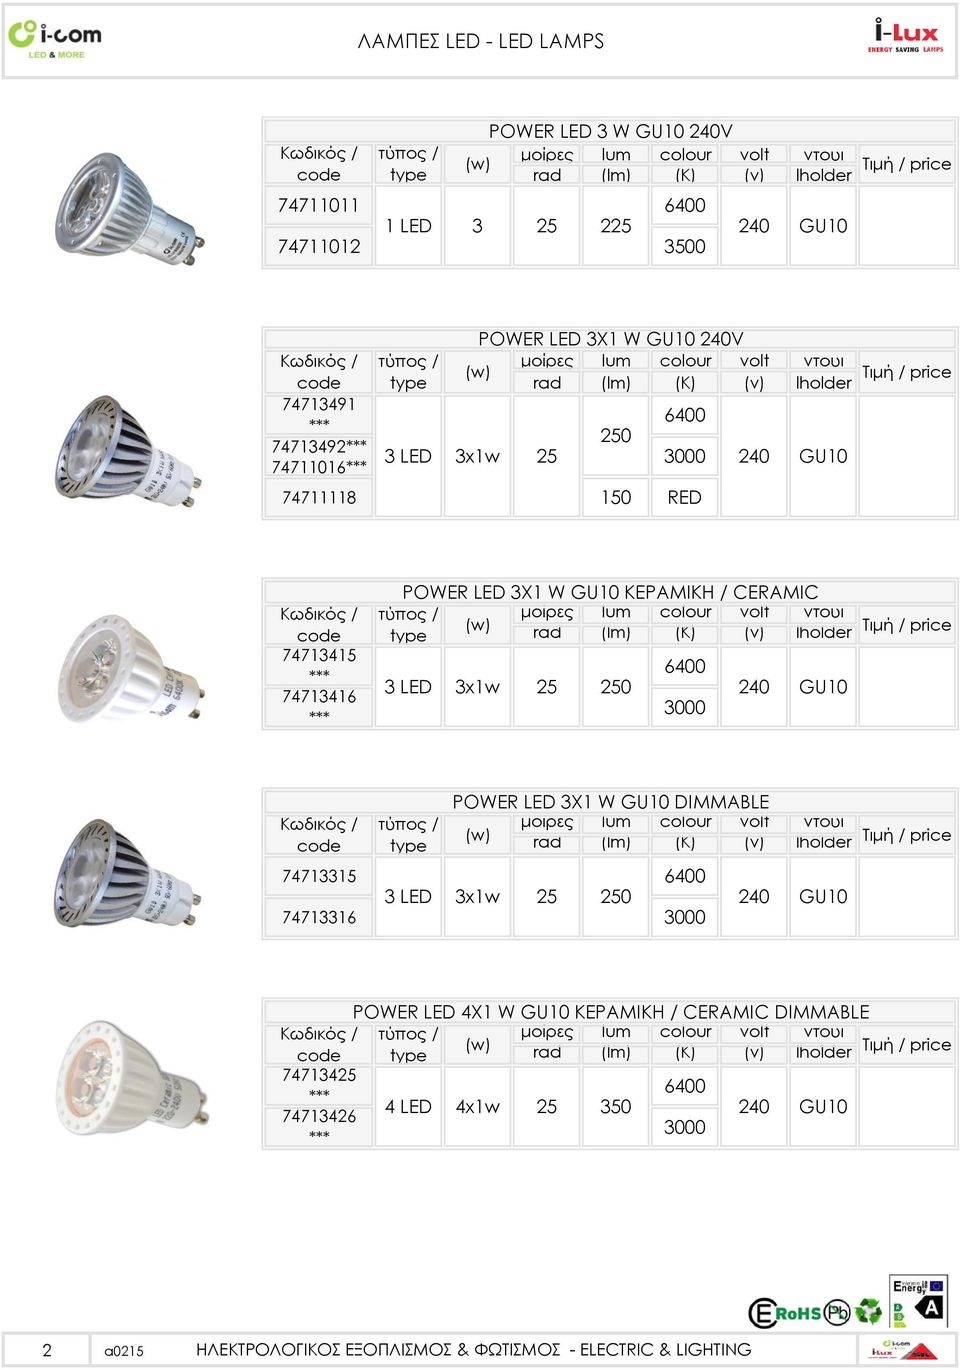 / CERAMIC 3 LED 3x1w 25 250 GU10 POWER LED 3X1 W GU10 DIMMABLE 74713315 3 LED 3x1w 25 250